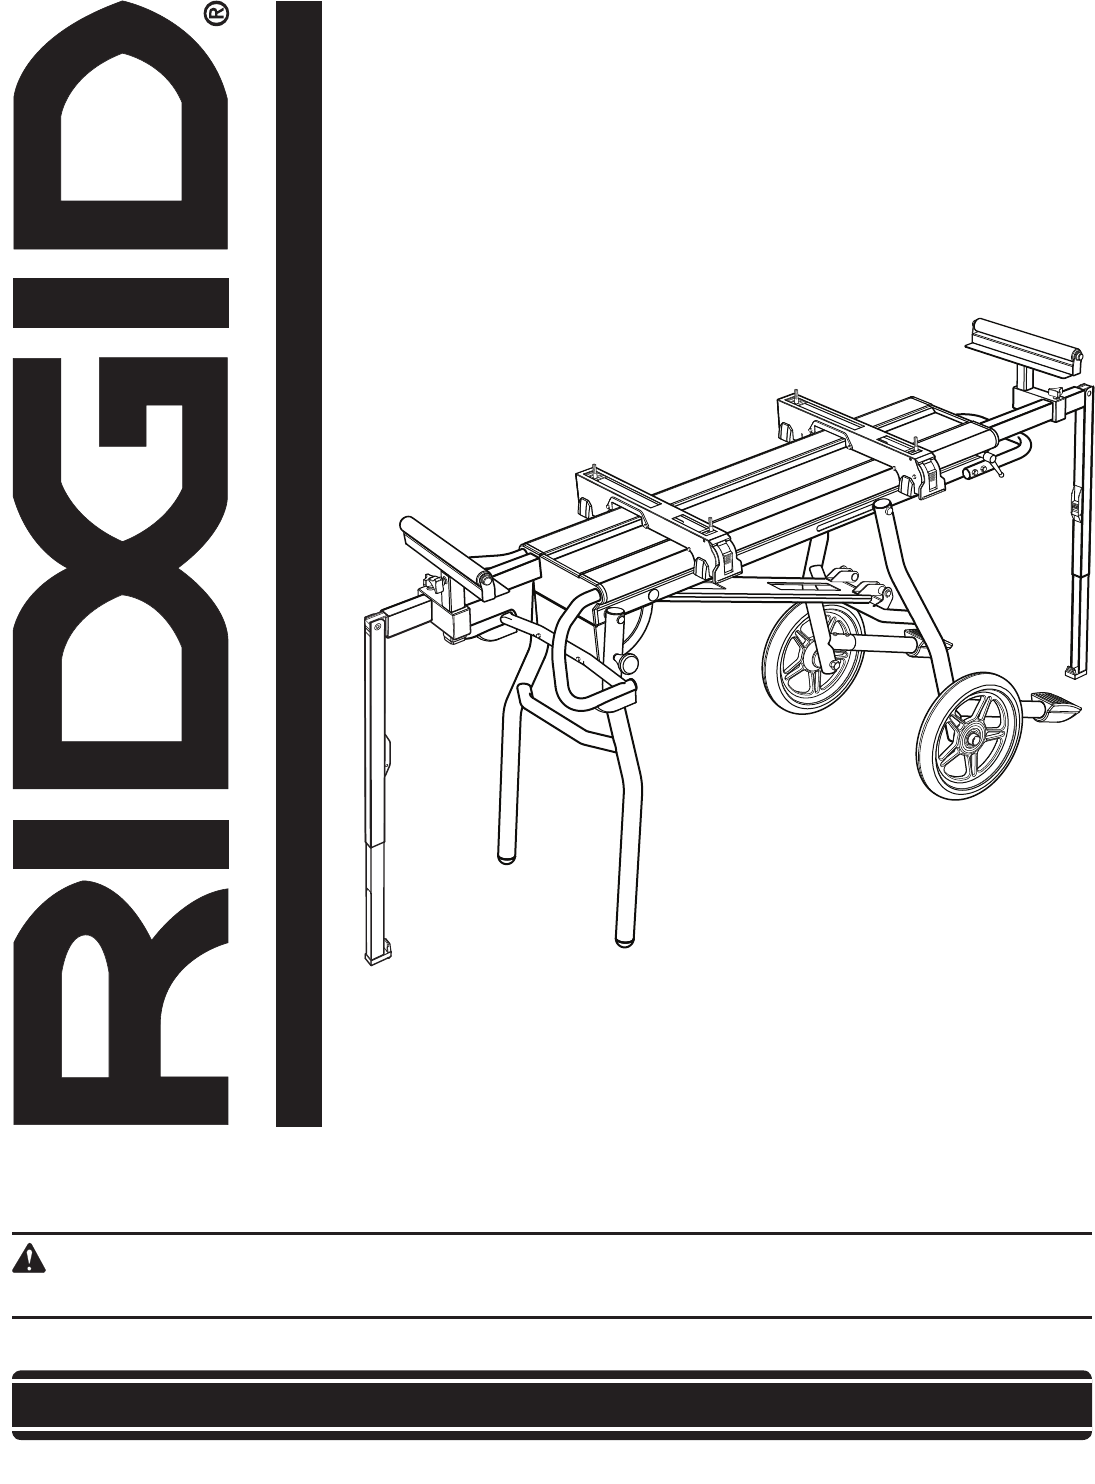 ridgid miter saw assembly instructions